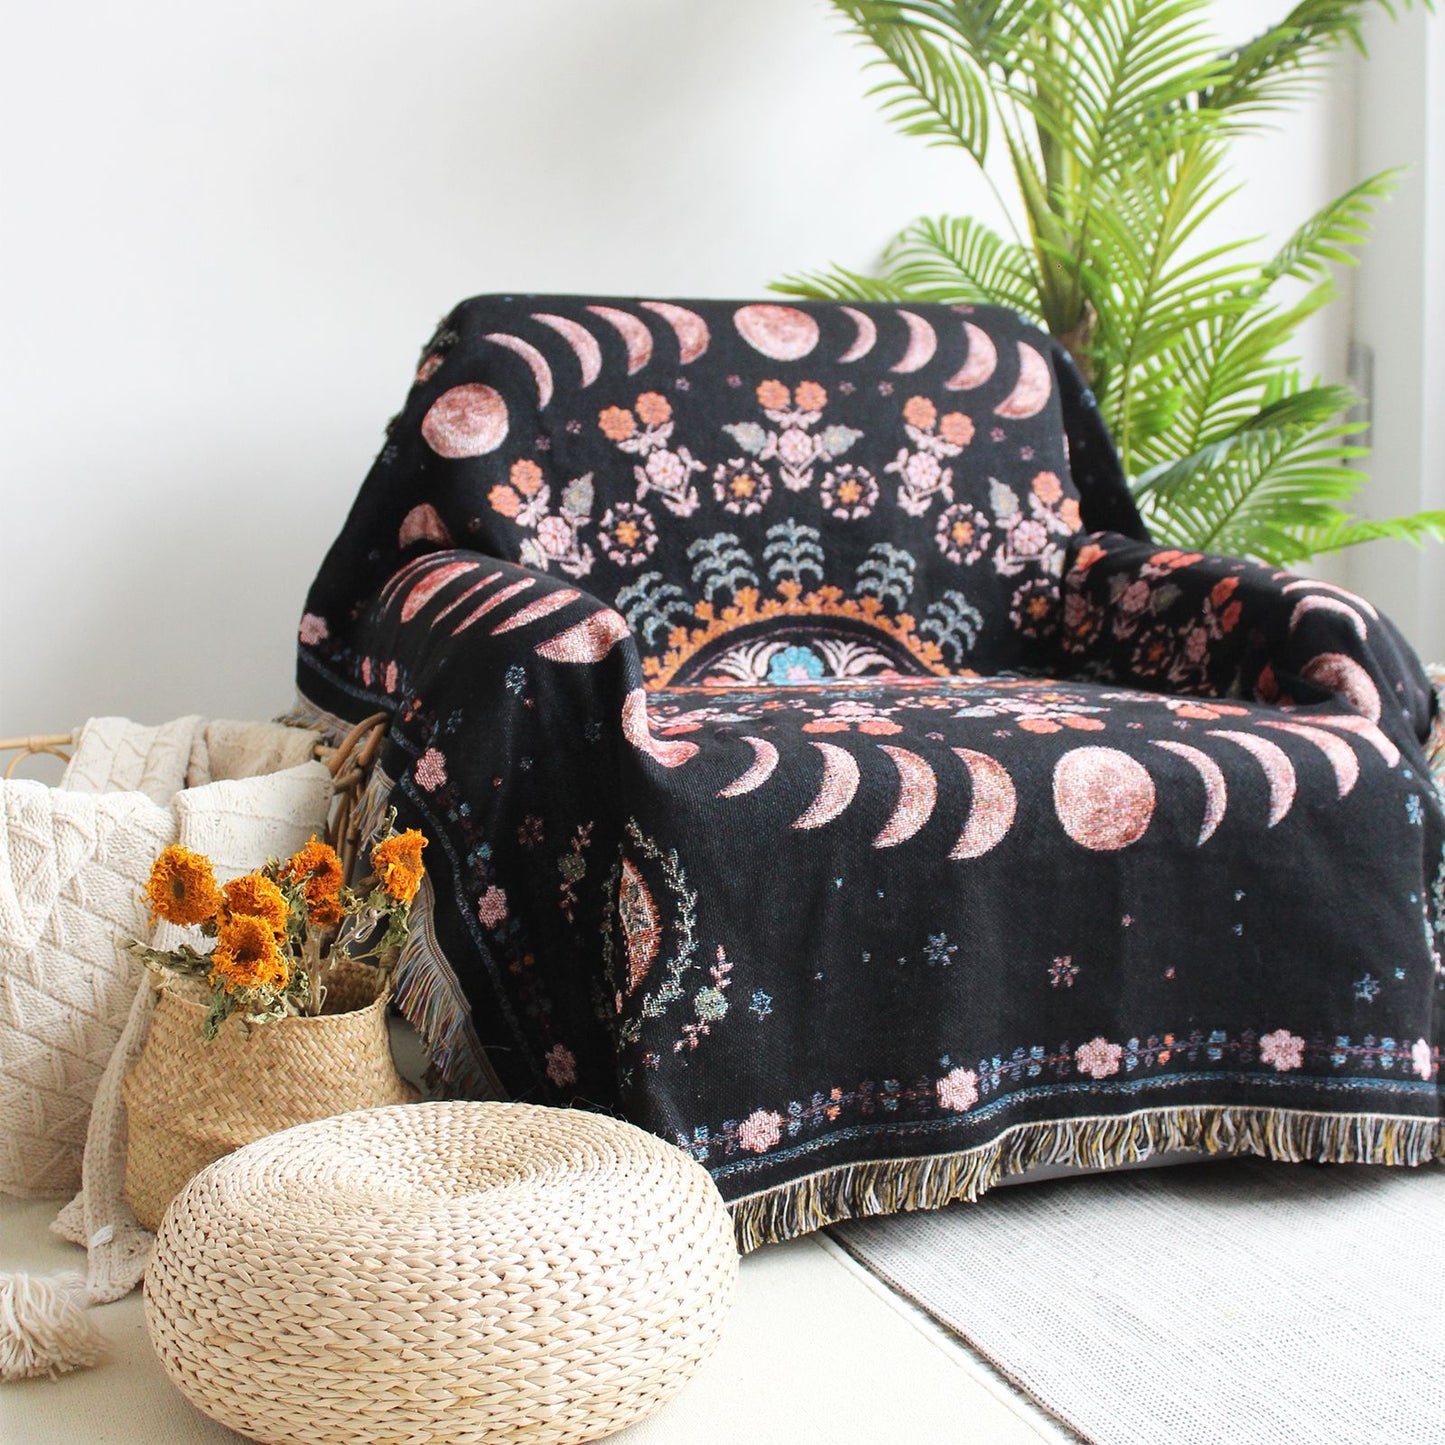 Woven Throw Blanket | Picnic Blanket | Beach Throw |Travel Blanket 130 x 160 CM